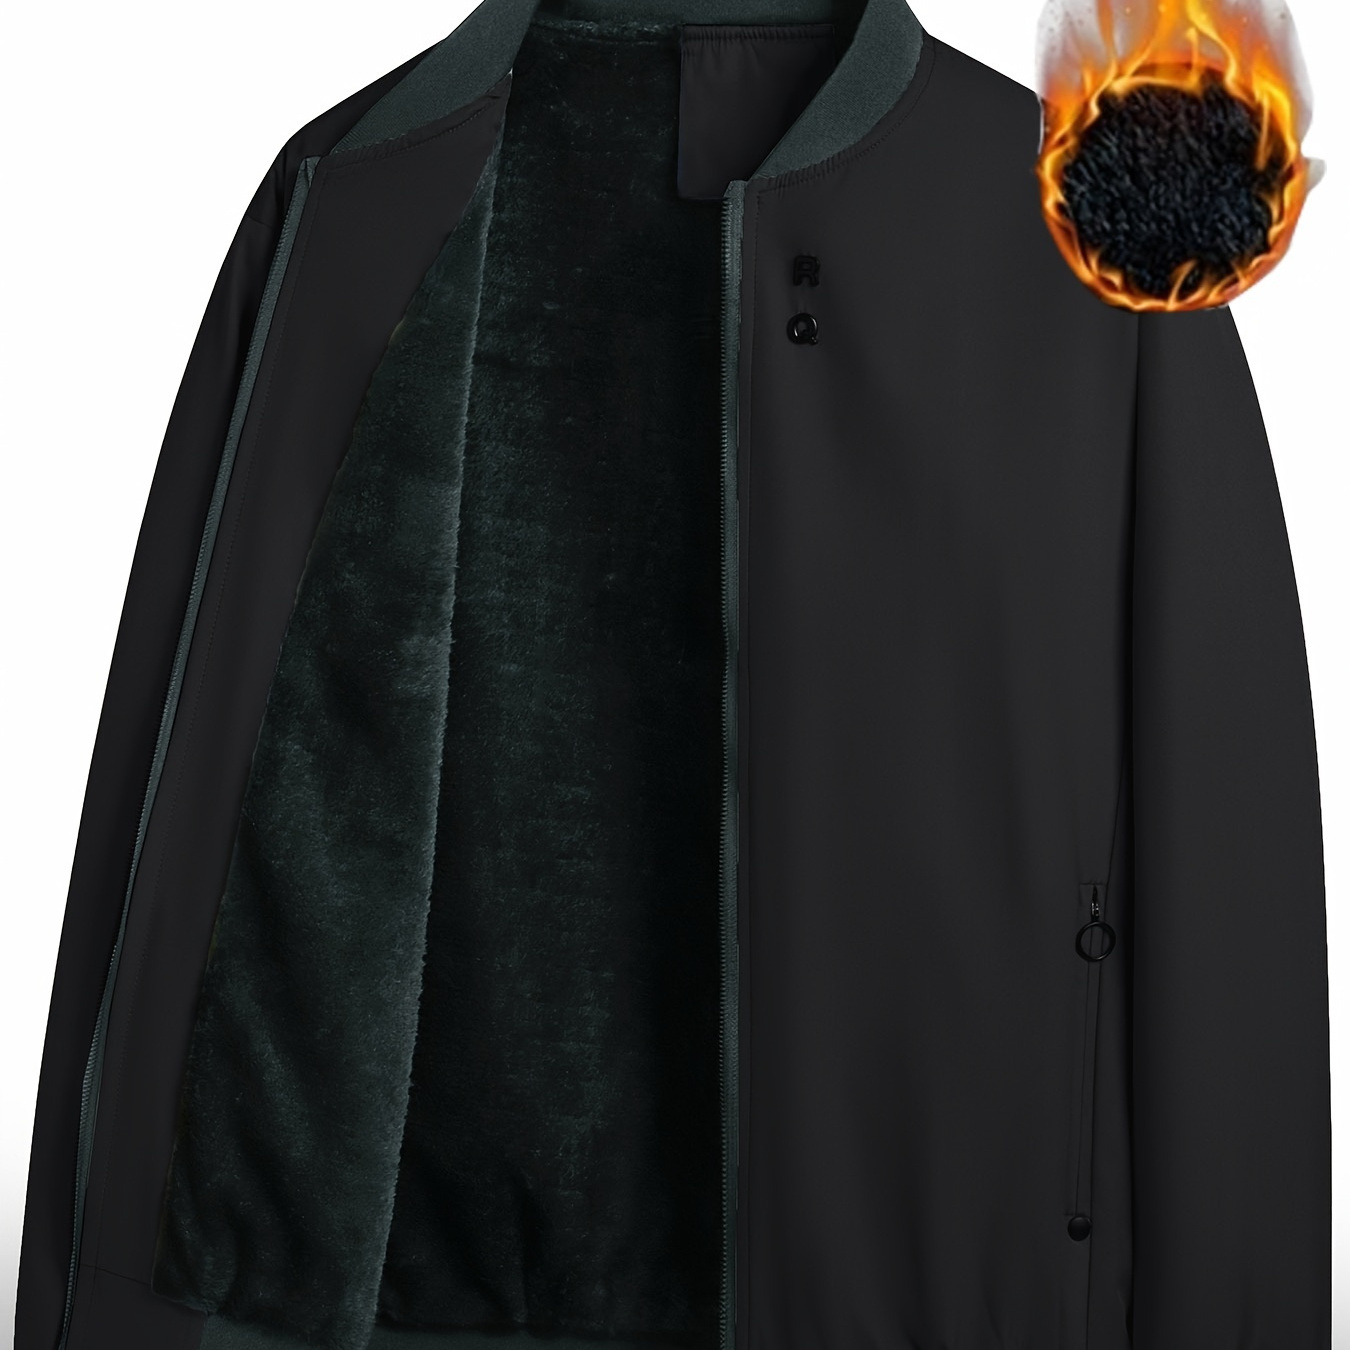 

Warm Fleece Letter " R&q" Print Jacket, Men's Casual Crew Neck Zipper Pockets Zip Up Jacket Coat For Fall Winter